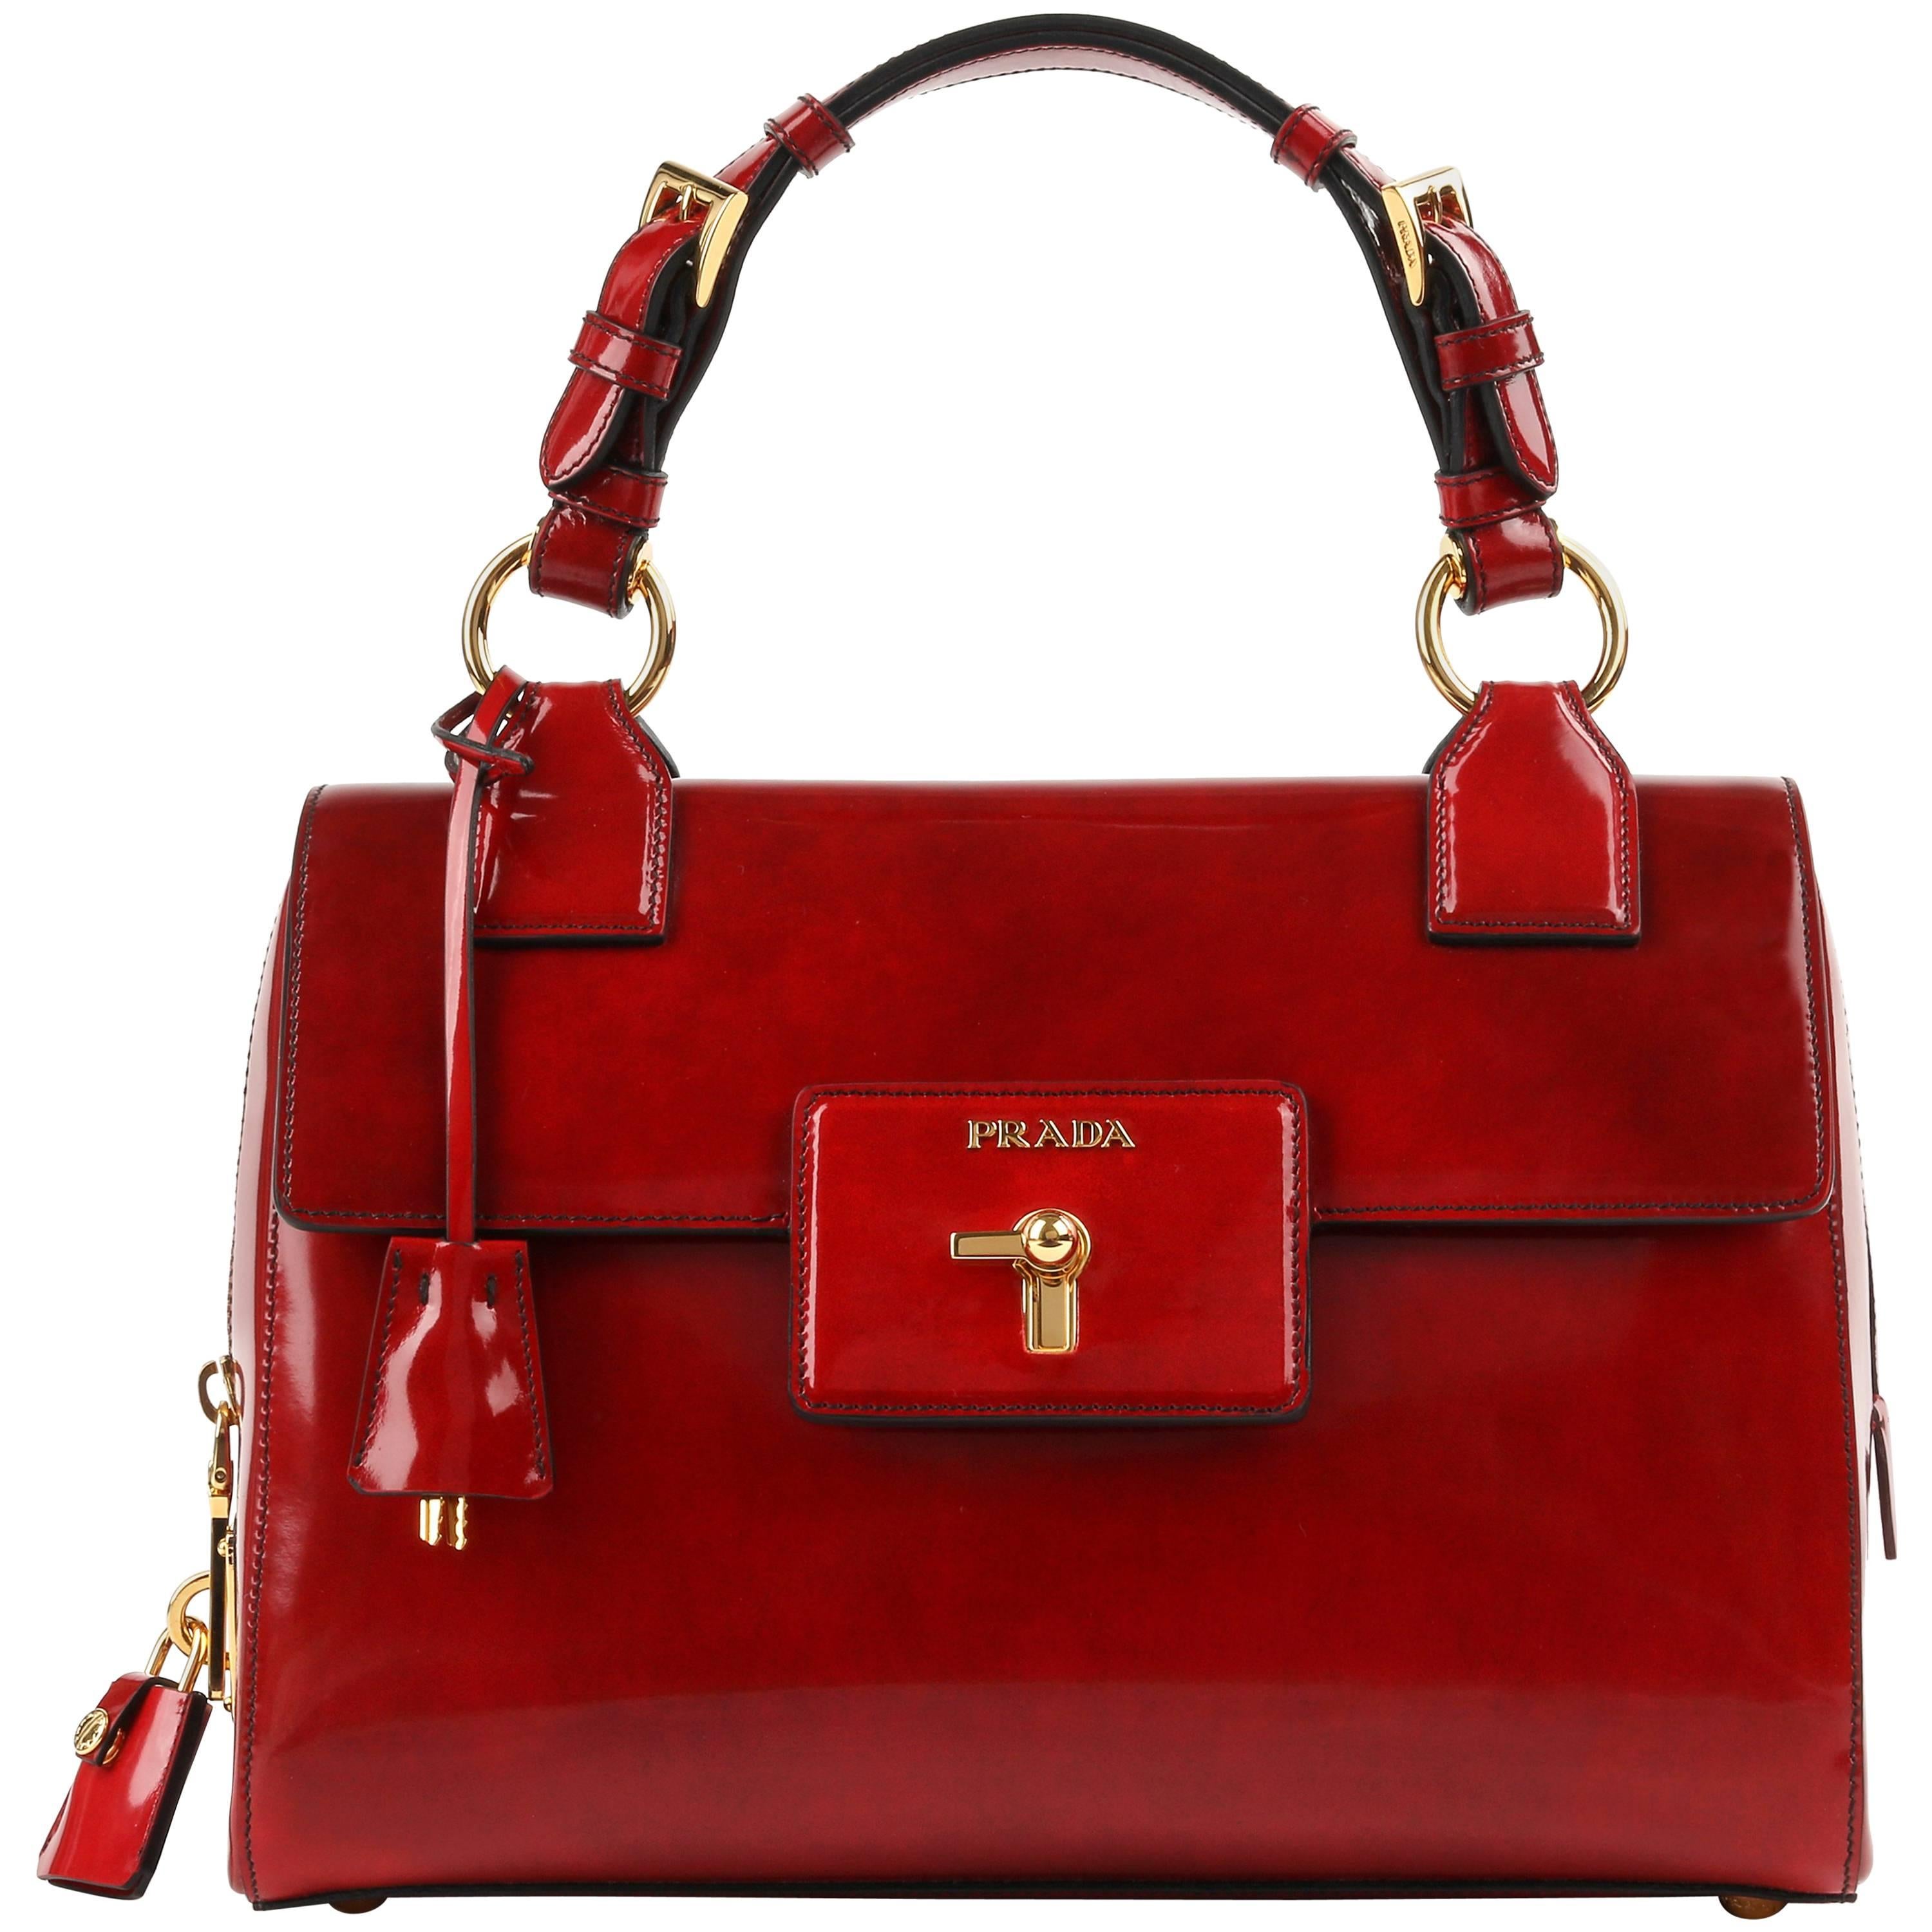 PRADA A/W 2012 Scarlet Red Spazzolato Leather Turn Lock Handbag Purse